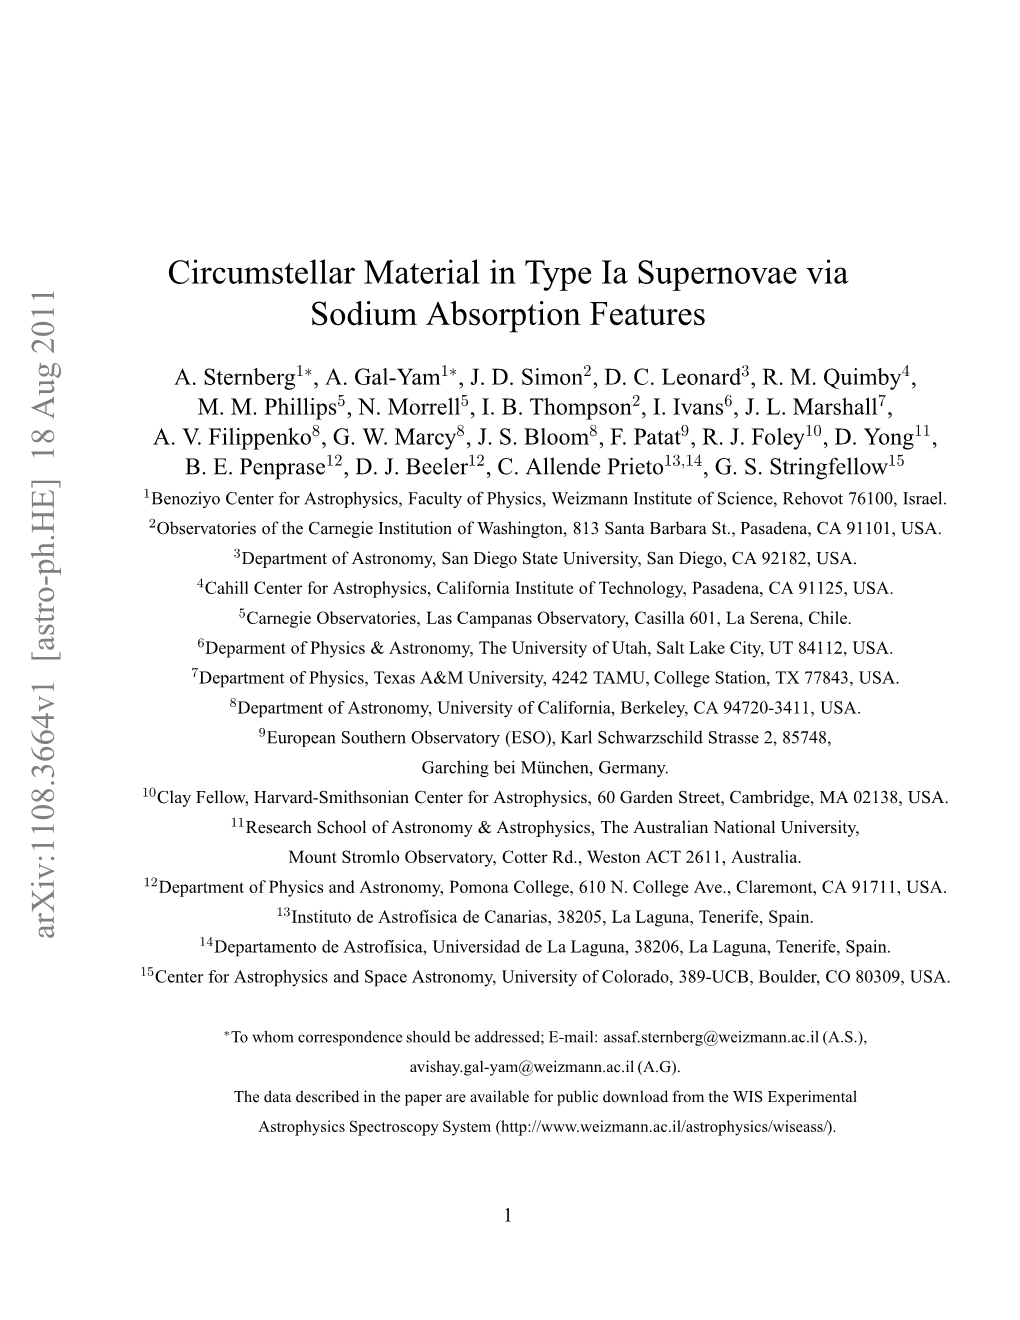 Circumstellar Material in Type Ia Supernovae Via Sodium Absorption